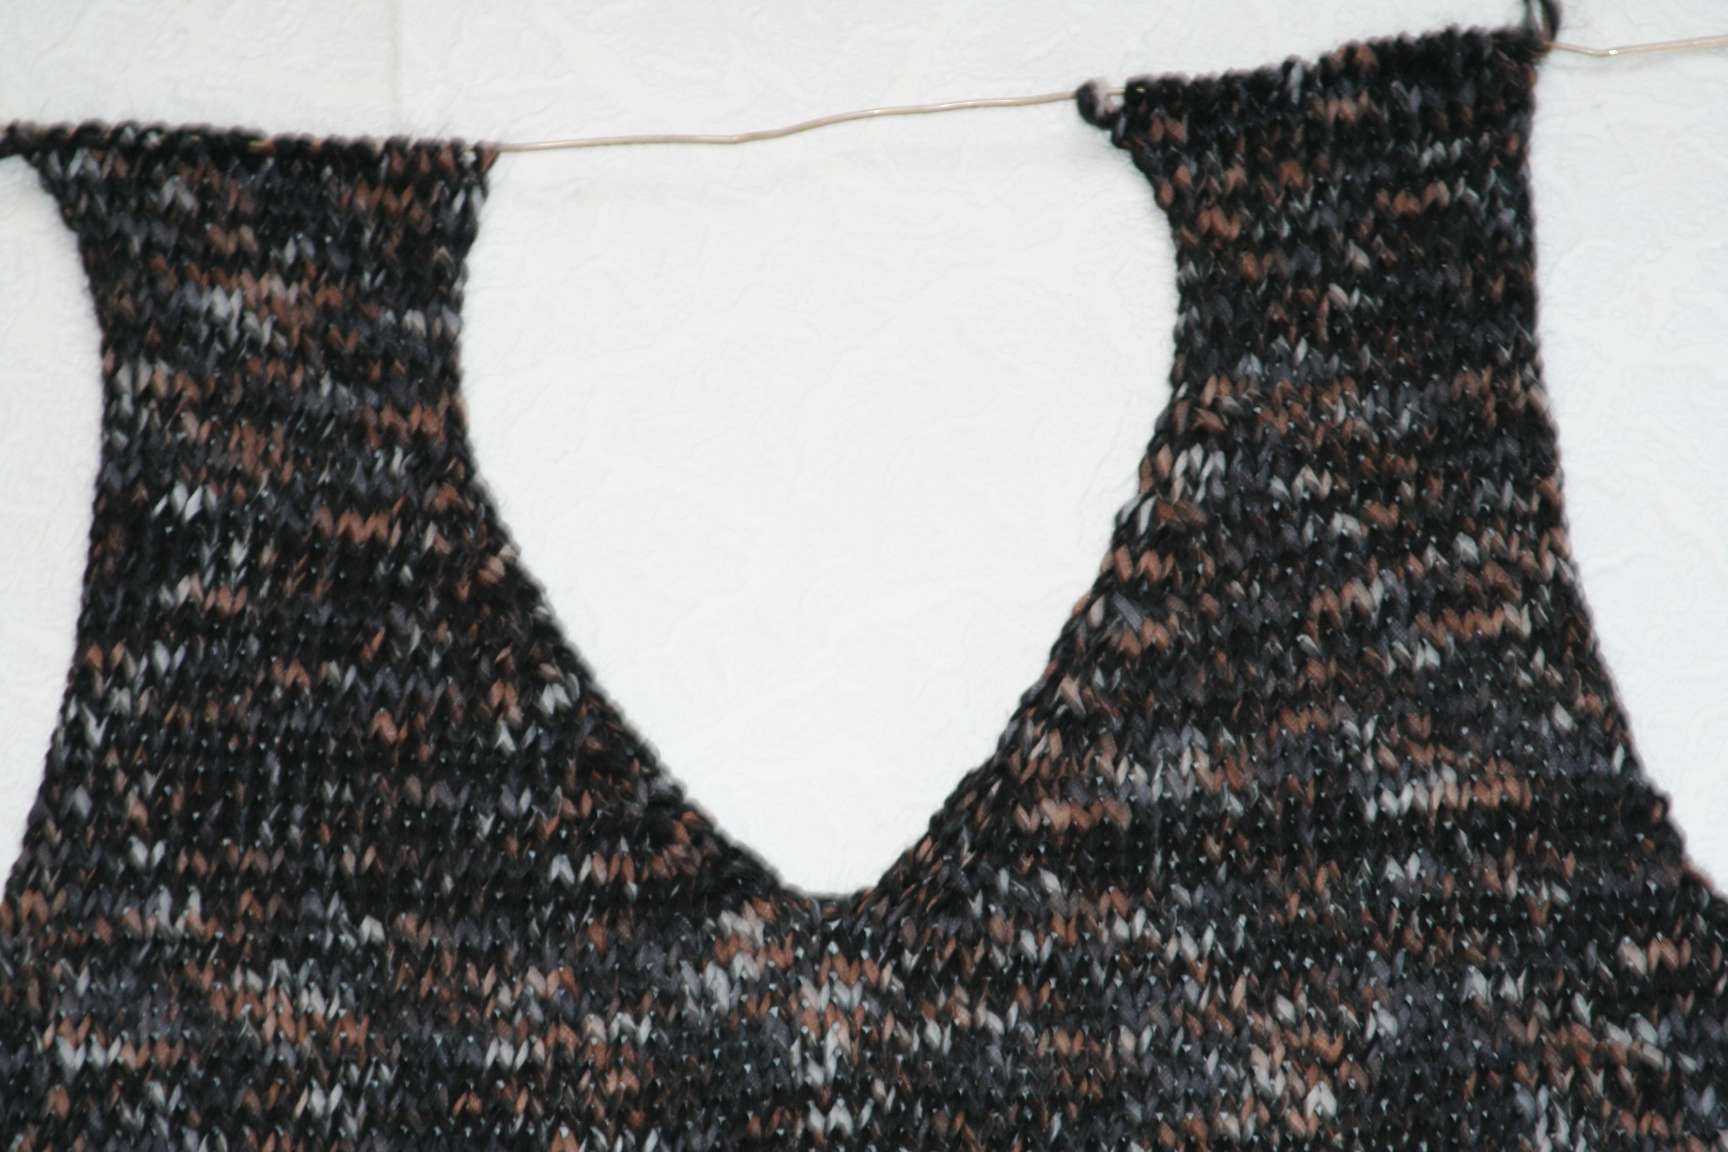 Develop reins report Pulover tricotat pentru barbati, tutorial cu poze si explicatii